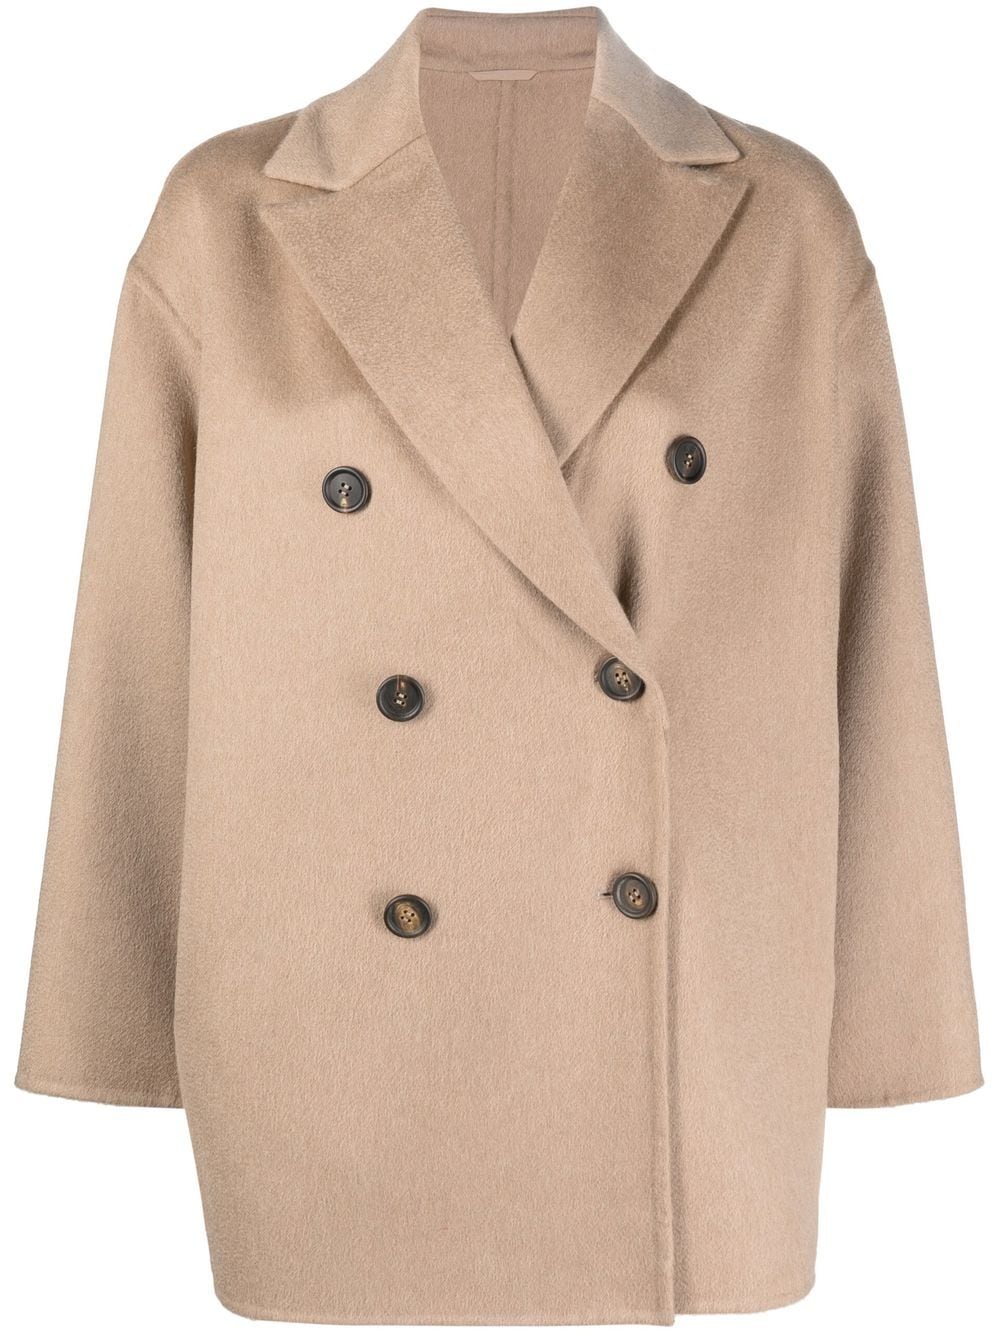 Brunello Cucinelli double-breasted cashmere coat - Neutrals